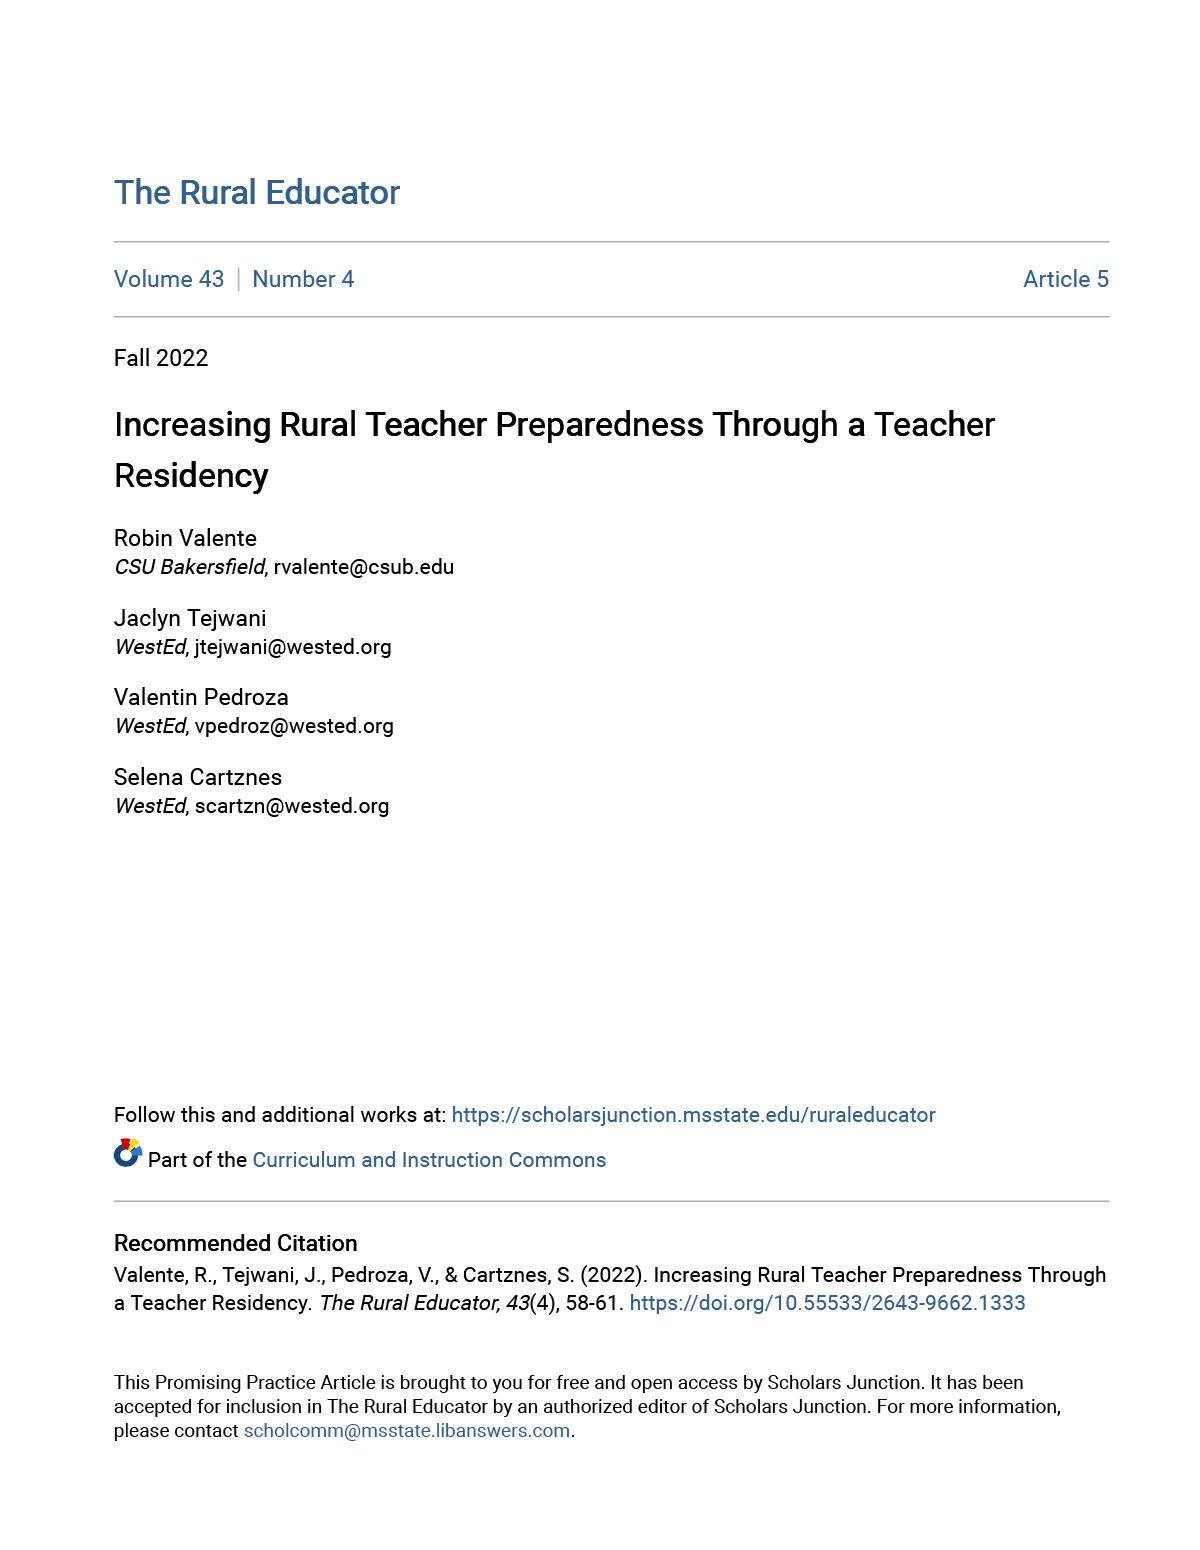 Increasing Rural Teacher Preparedness Through a Teacher Residency